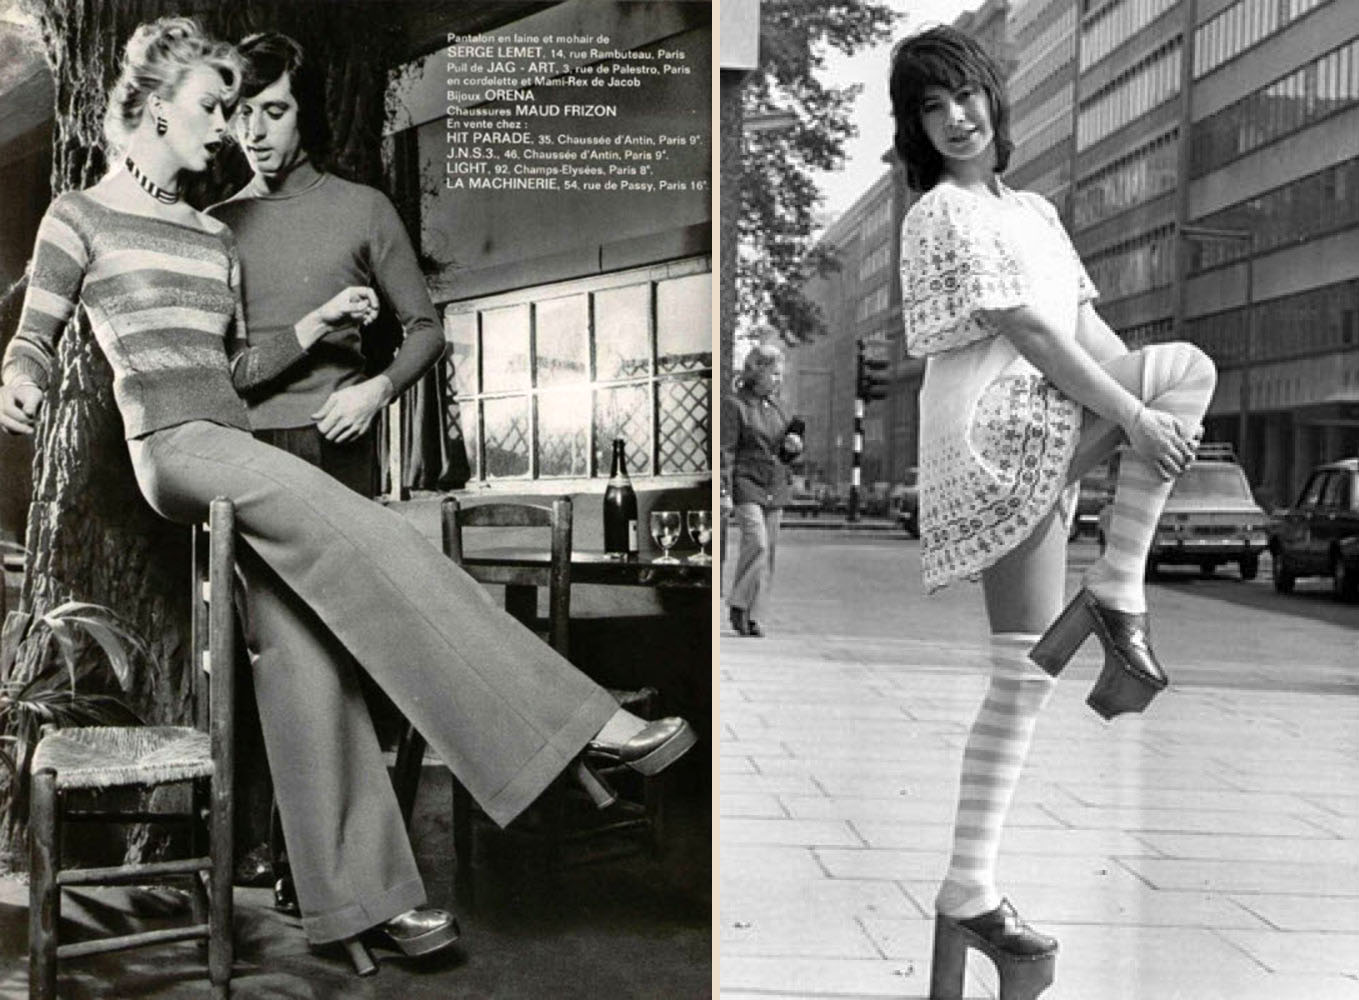 70s style platform shoes